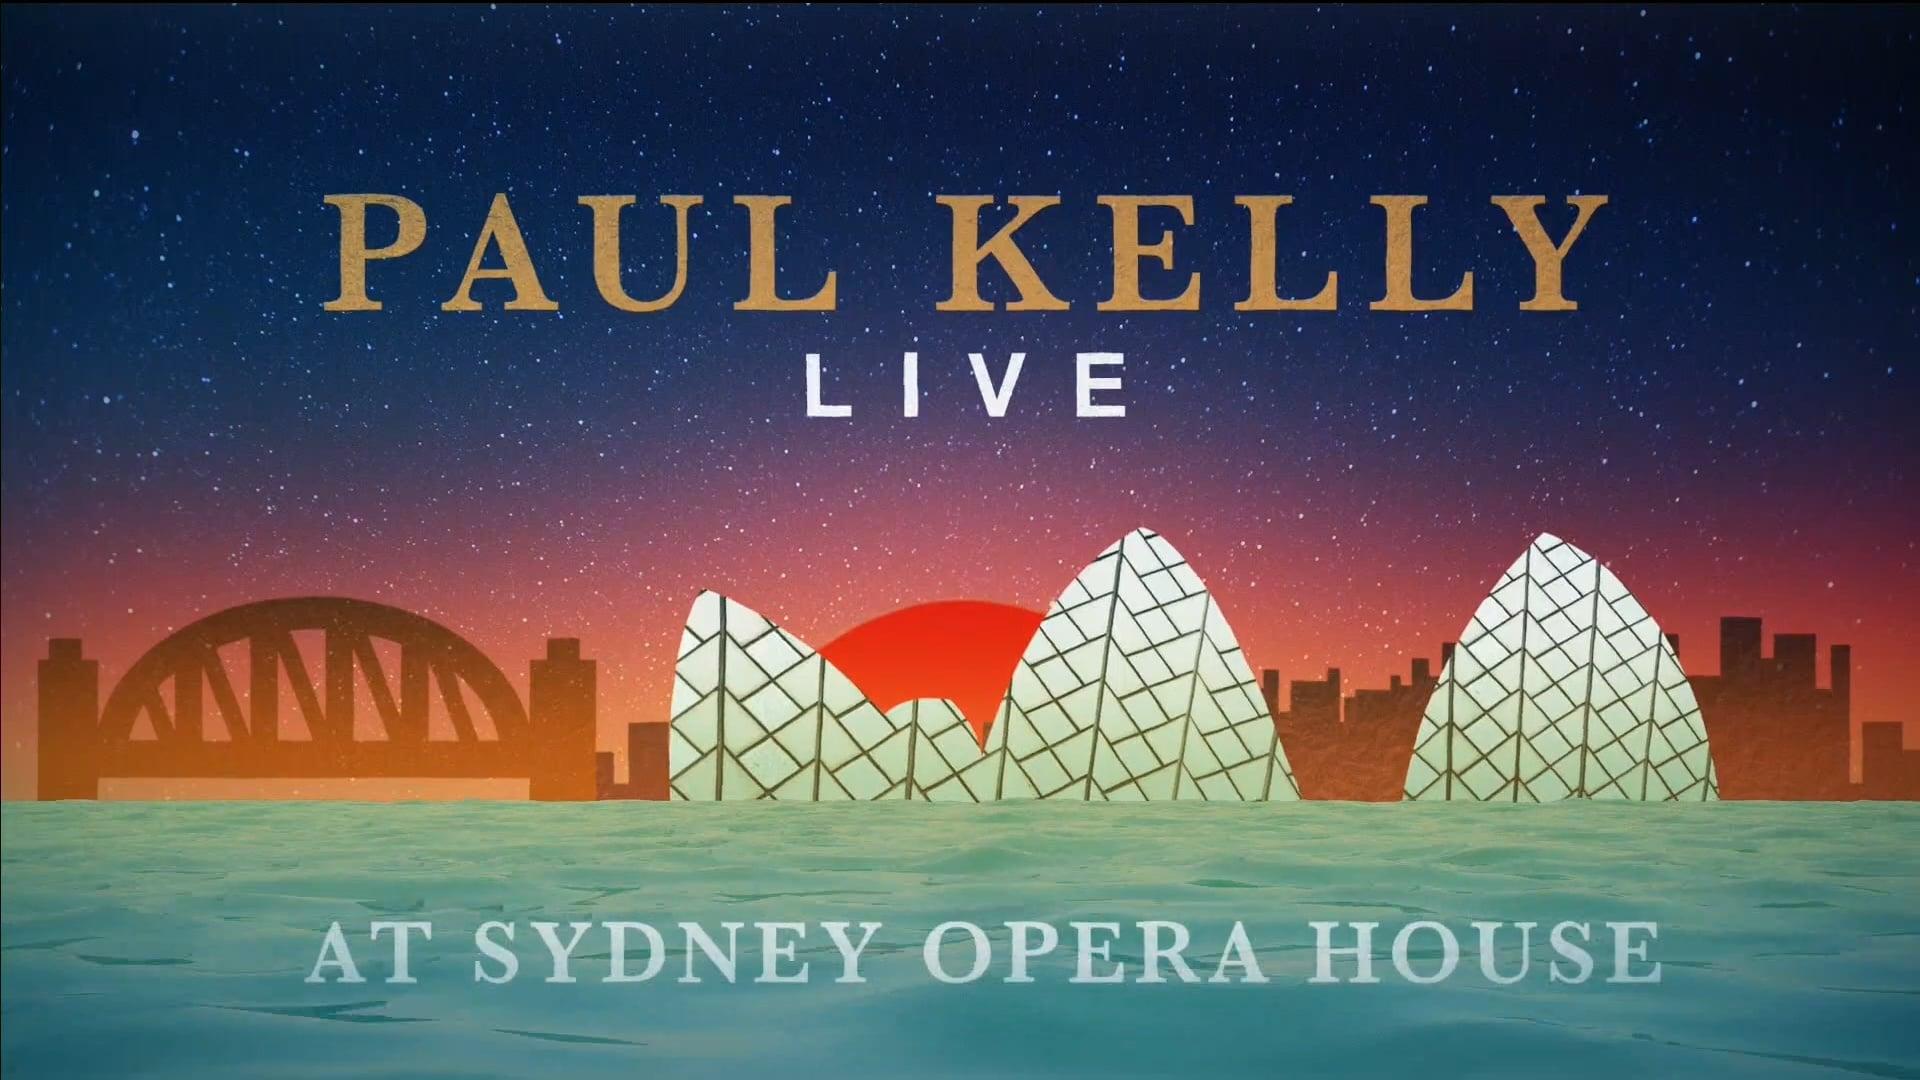 Paul Kelly Live at the Sydney Opera House backdrop